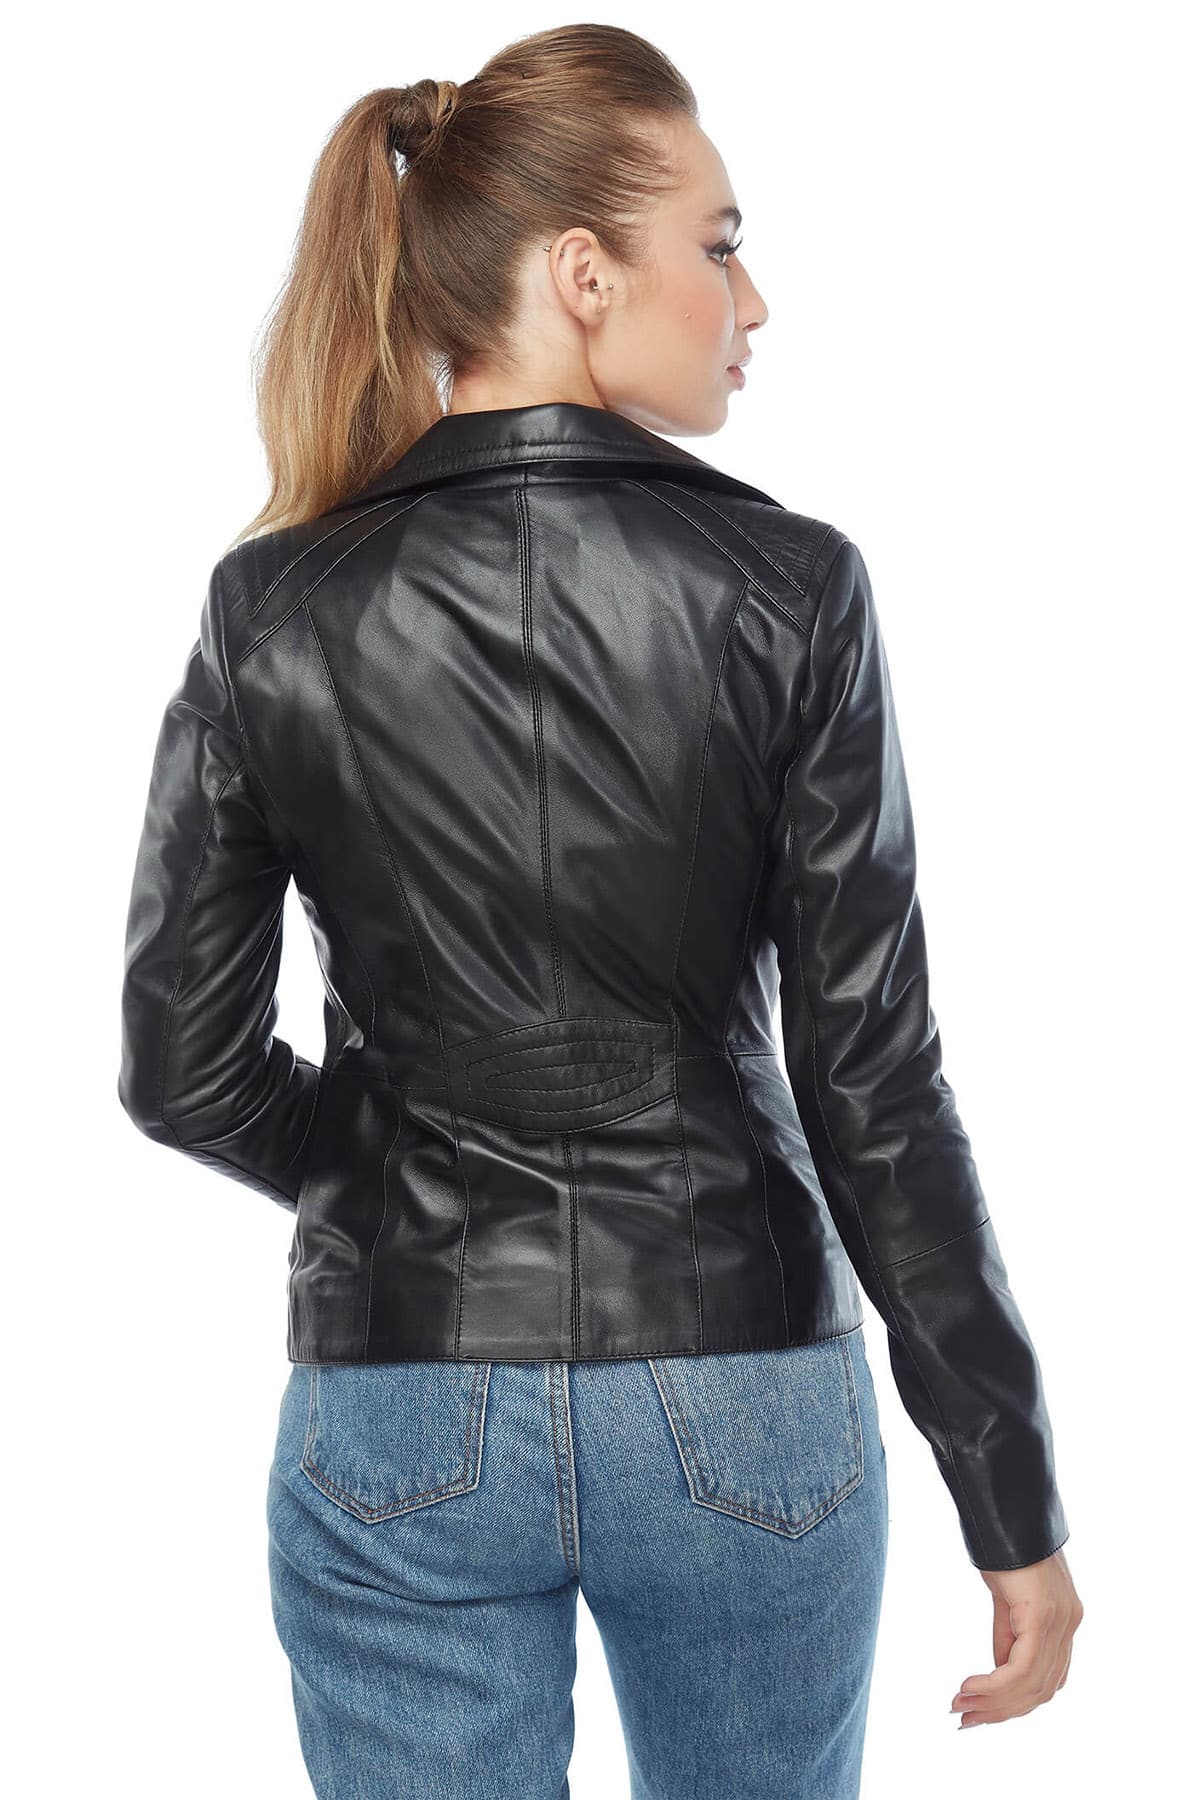 Sylvia Women's 100 % Real Black Leather Sport Biker Jacket